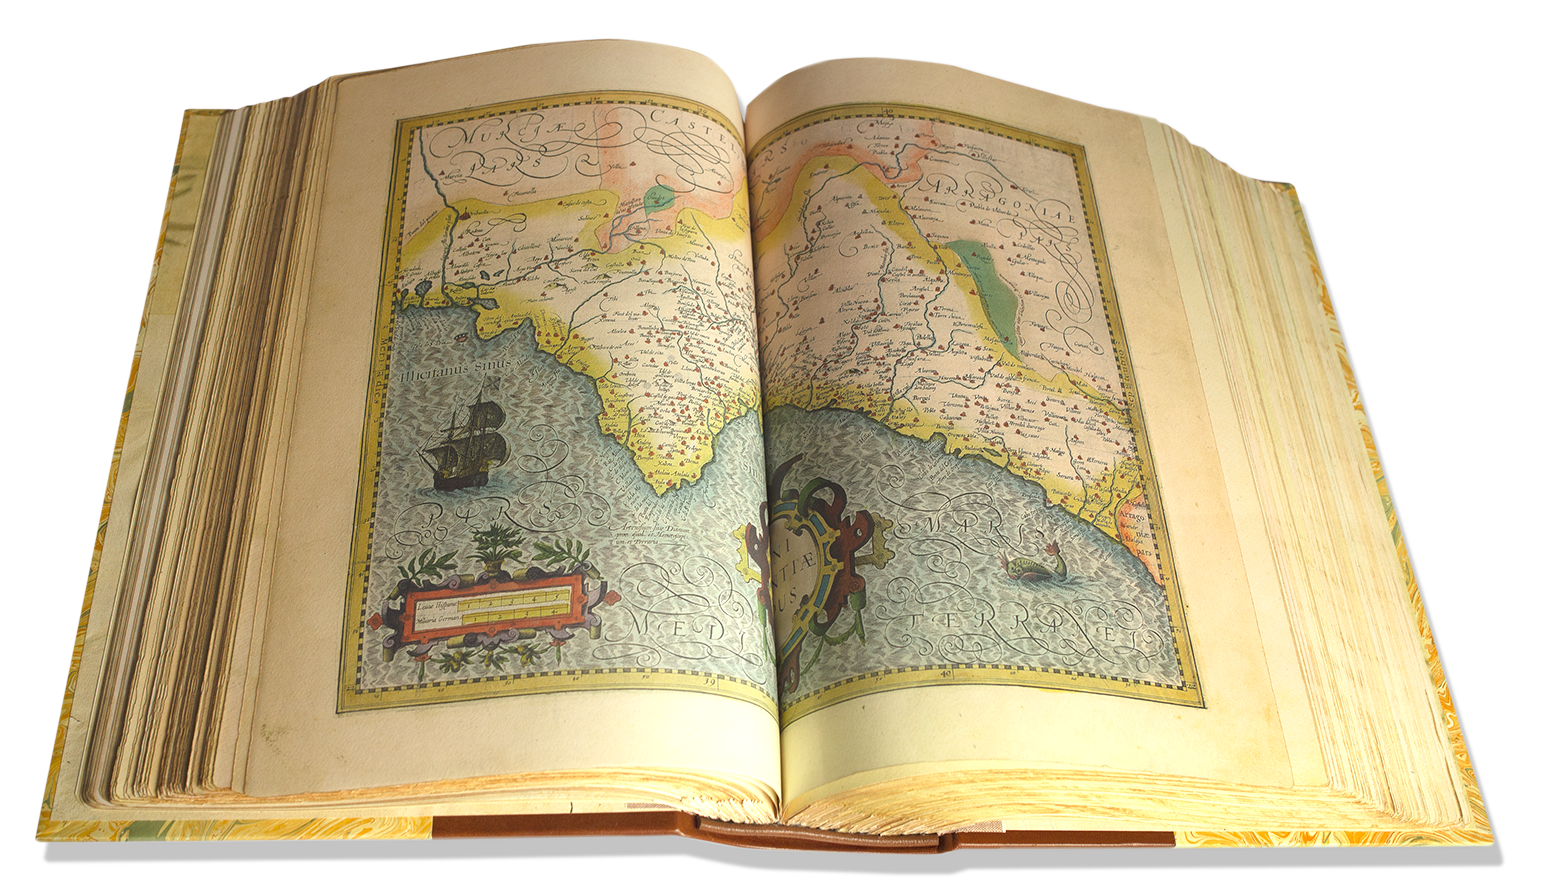 ▷ Art Book - Atlas de Mercator